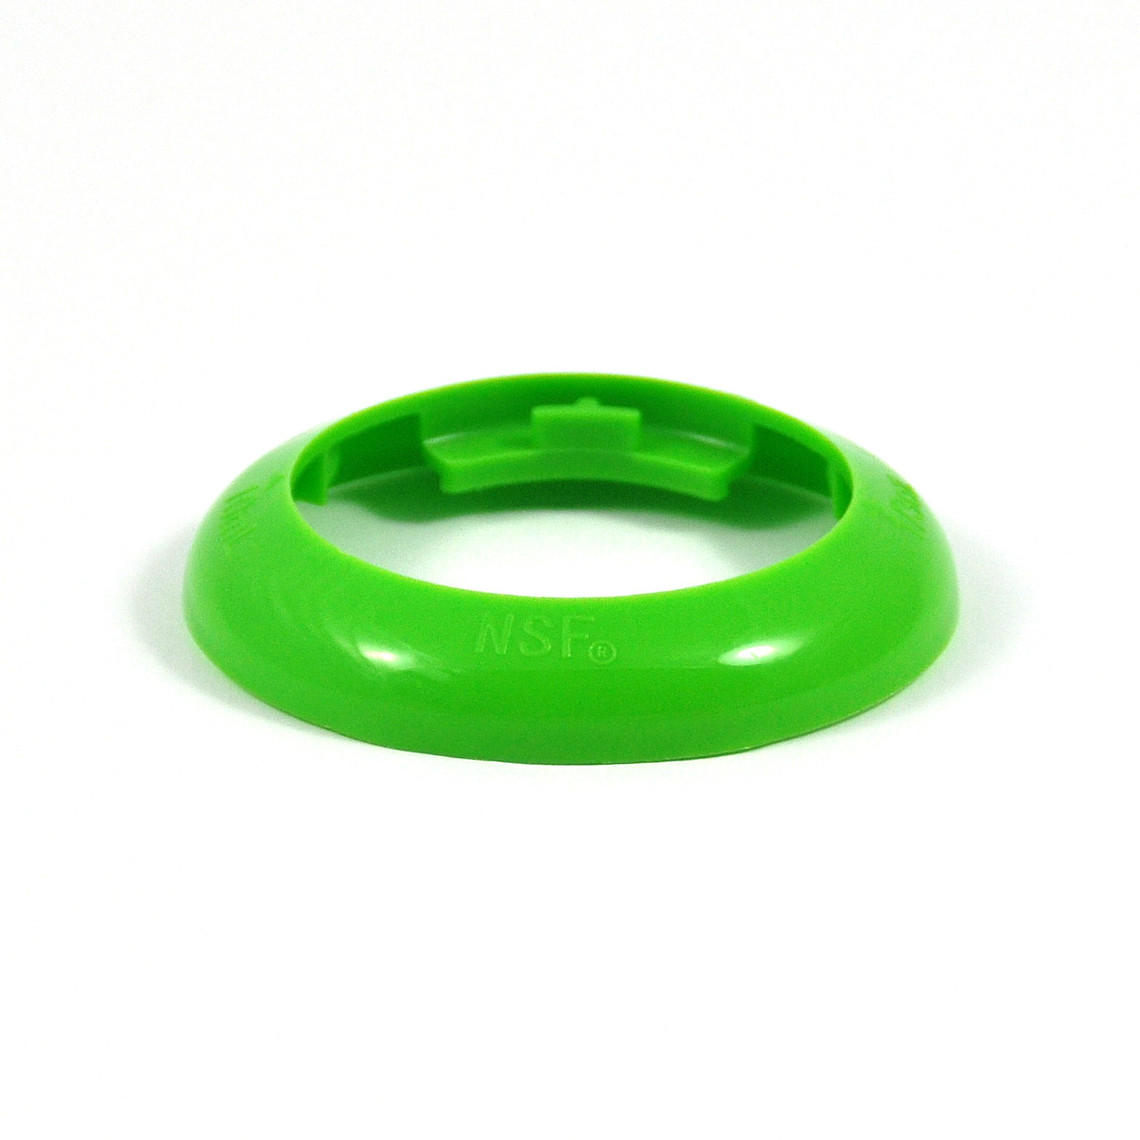 Green 1/3oz (10ml) portion control ring